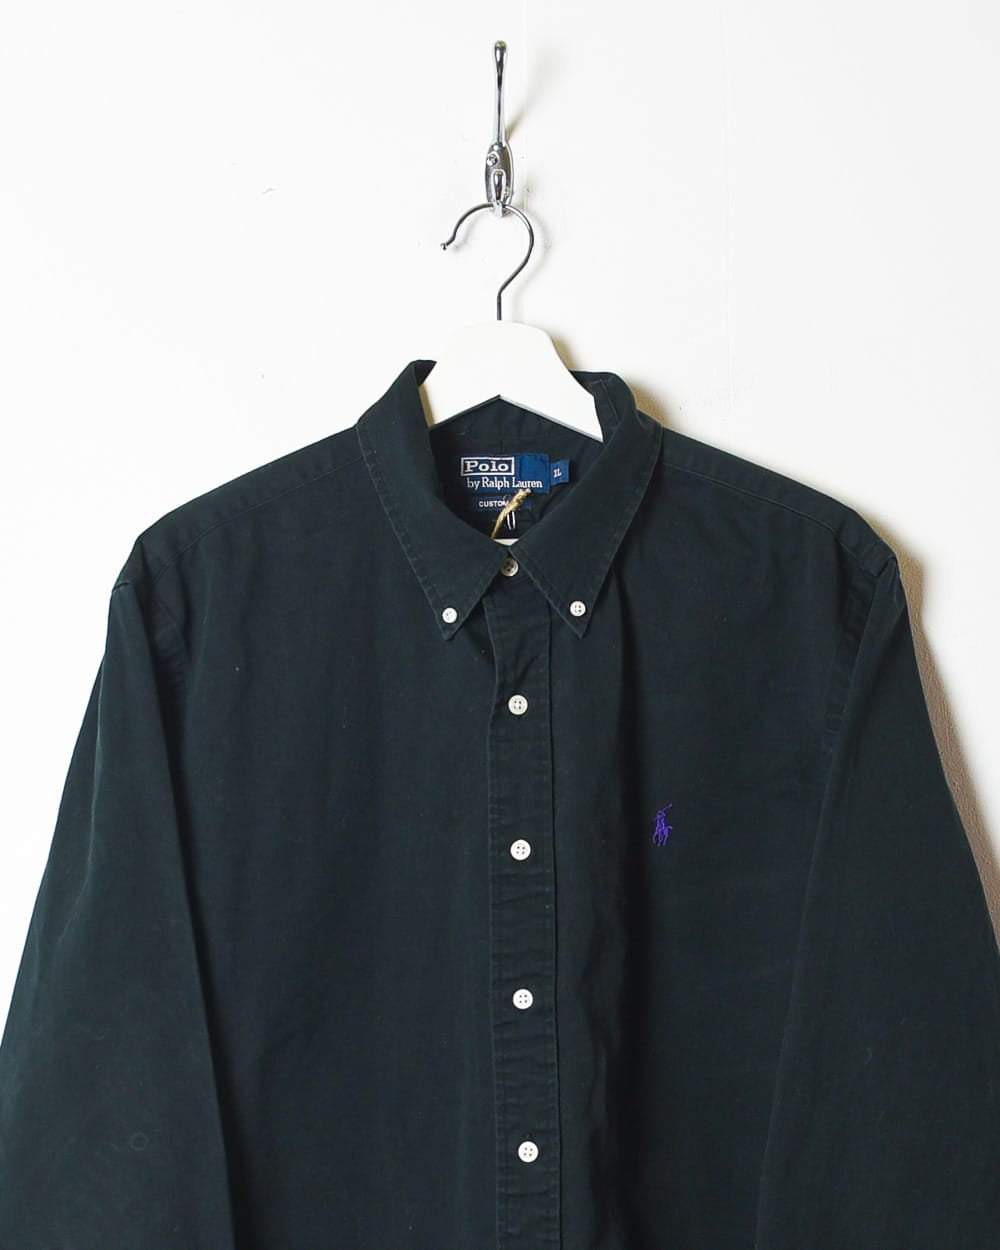 Black Polo Ralph Lauren Shirt - X-Large